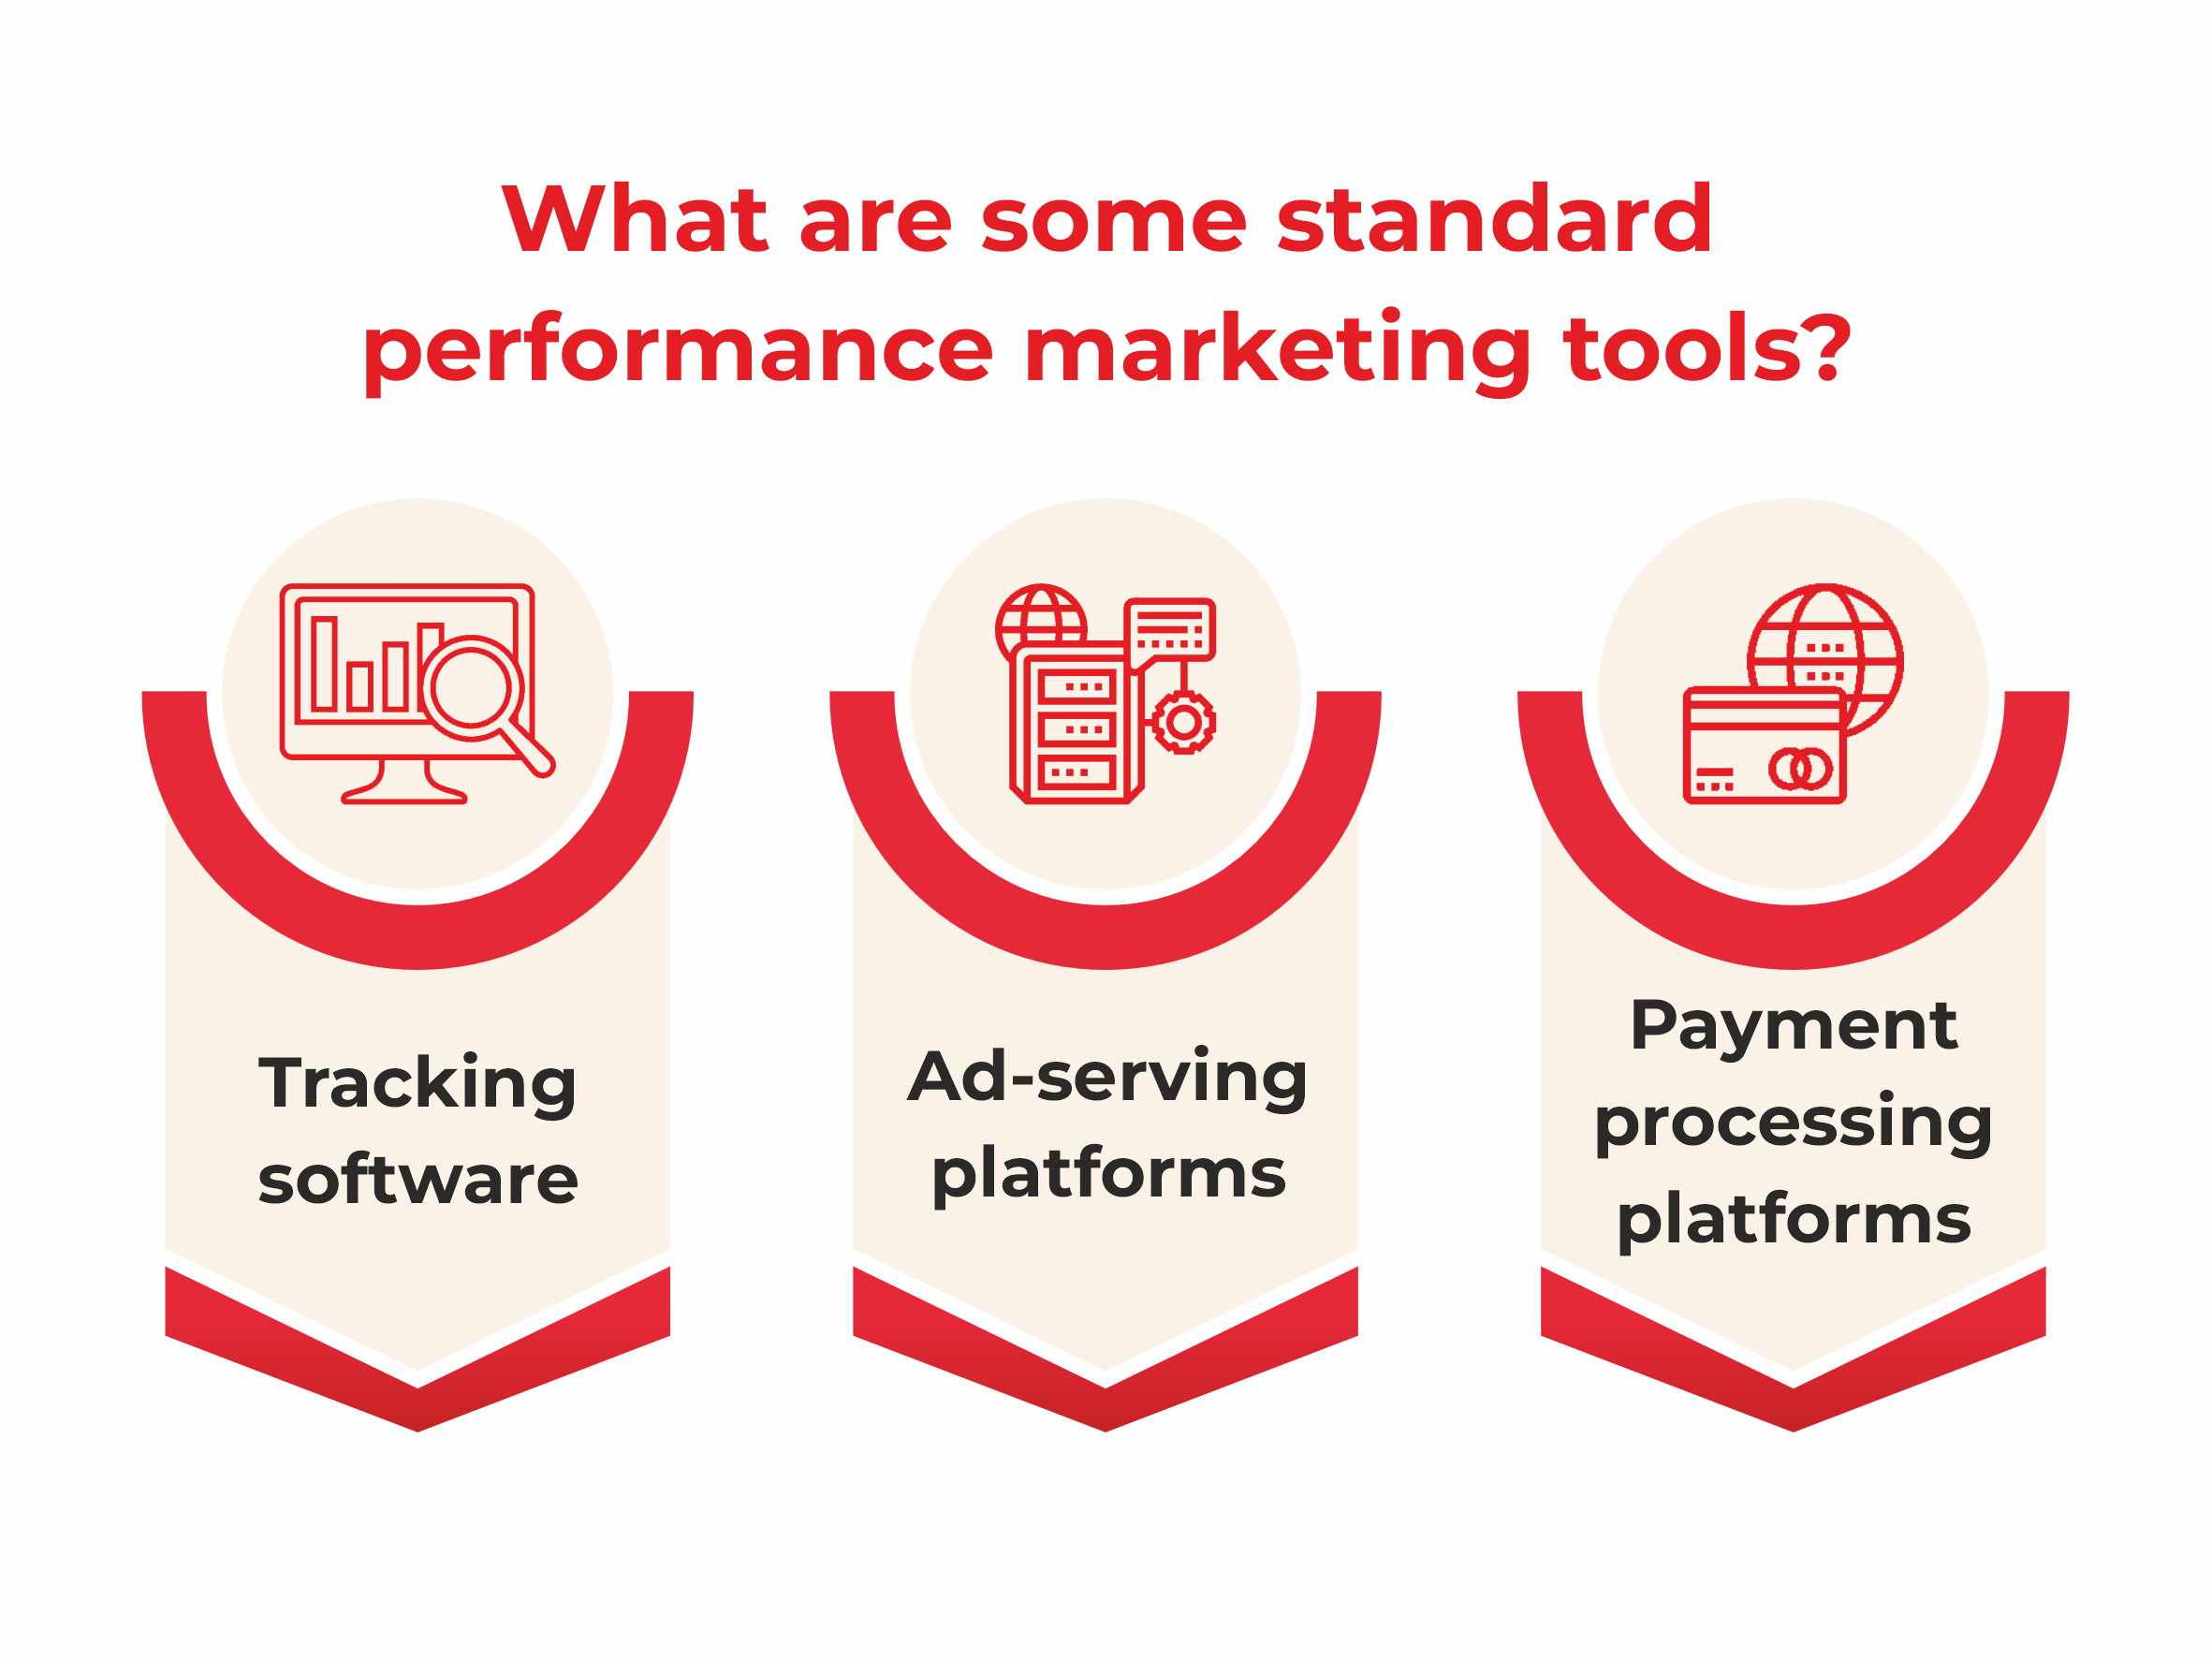 Standard performance marketing tools